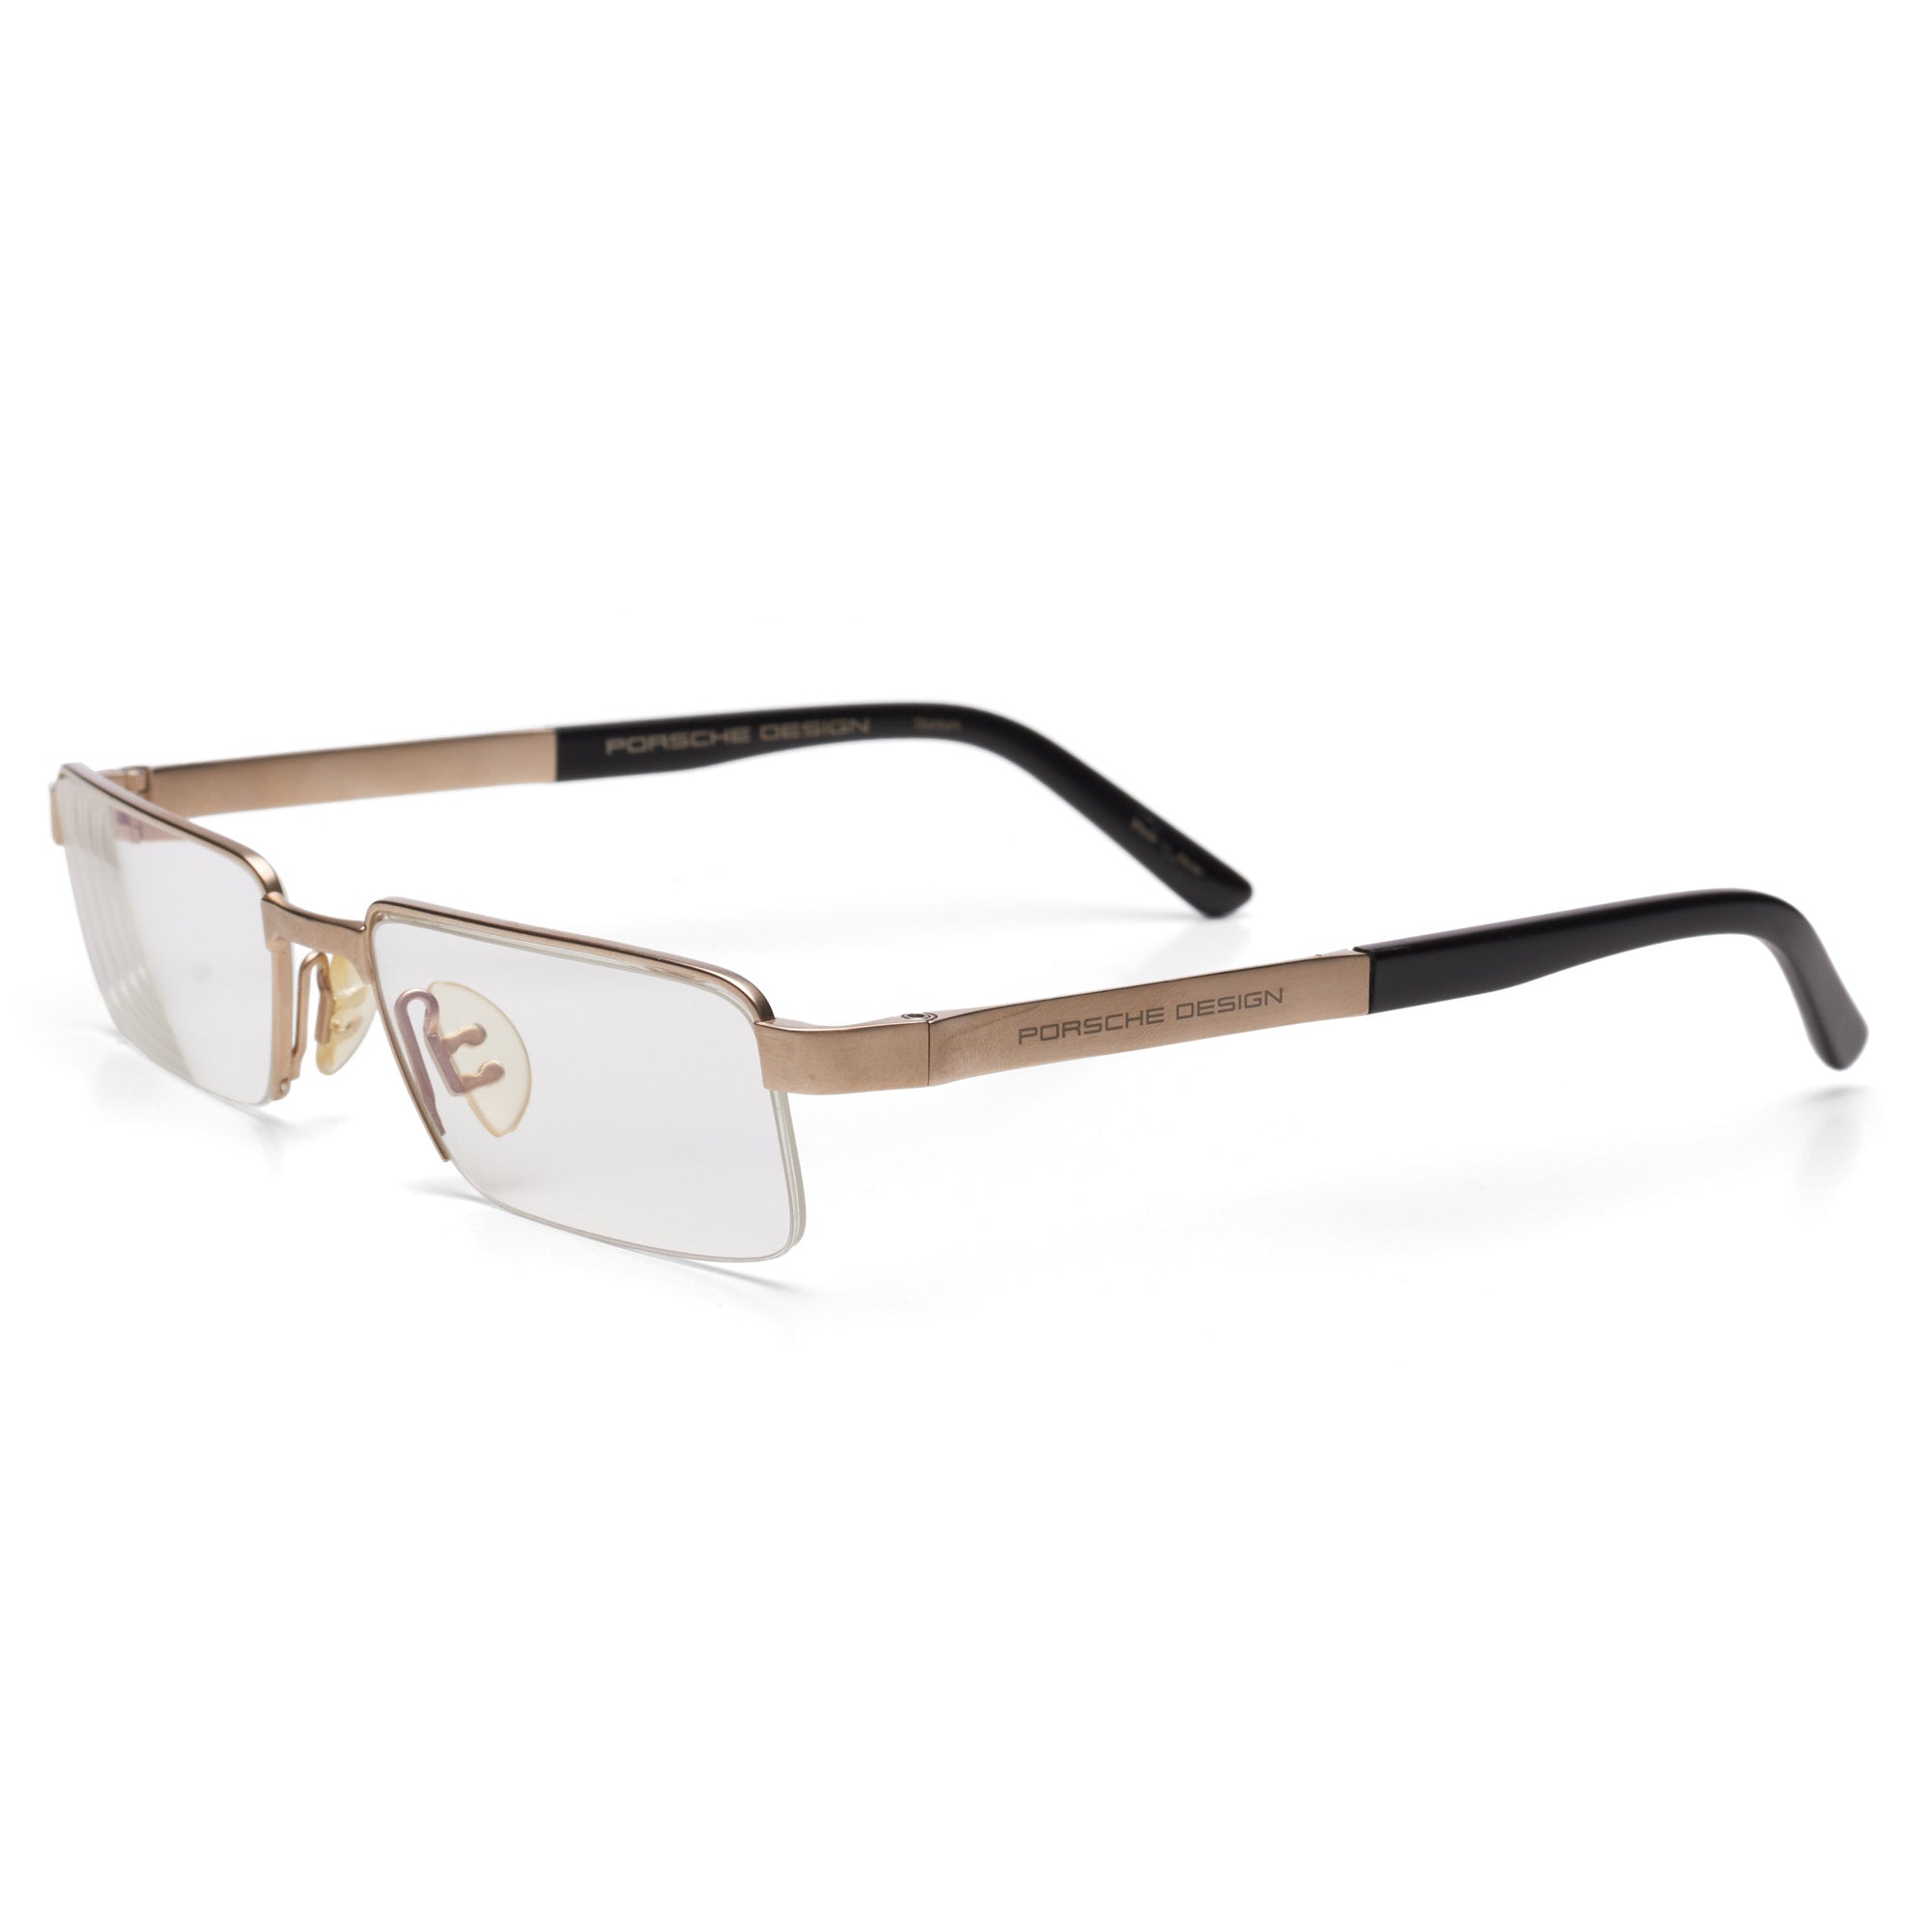 PORSCHE DESIGN P 8118 A Titanium Semi Rimless Rectangular Eyeglasses with Case